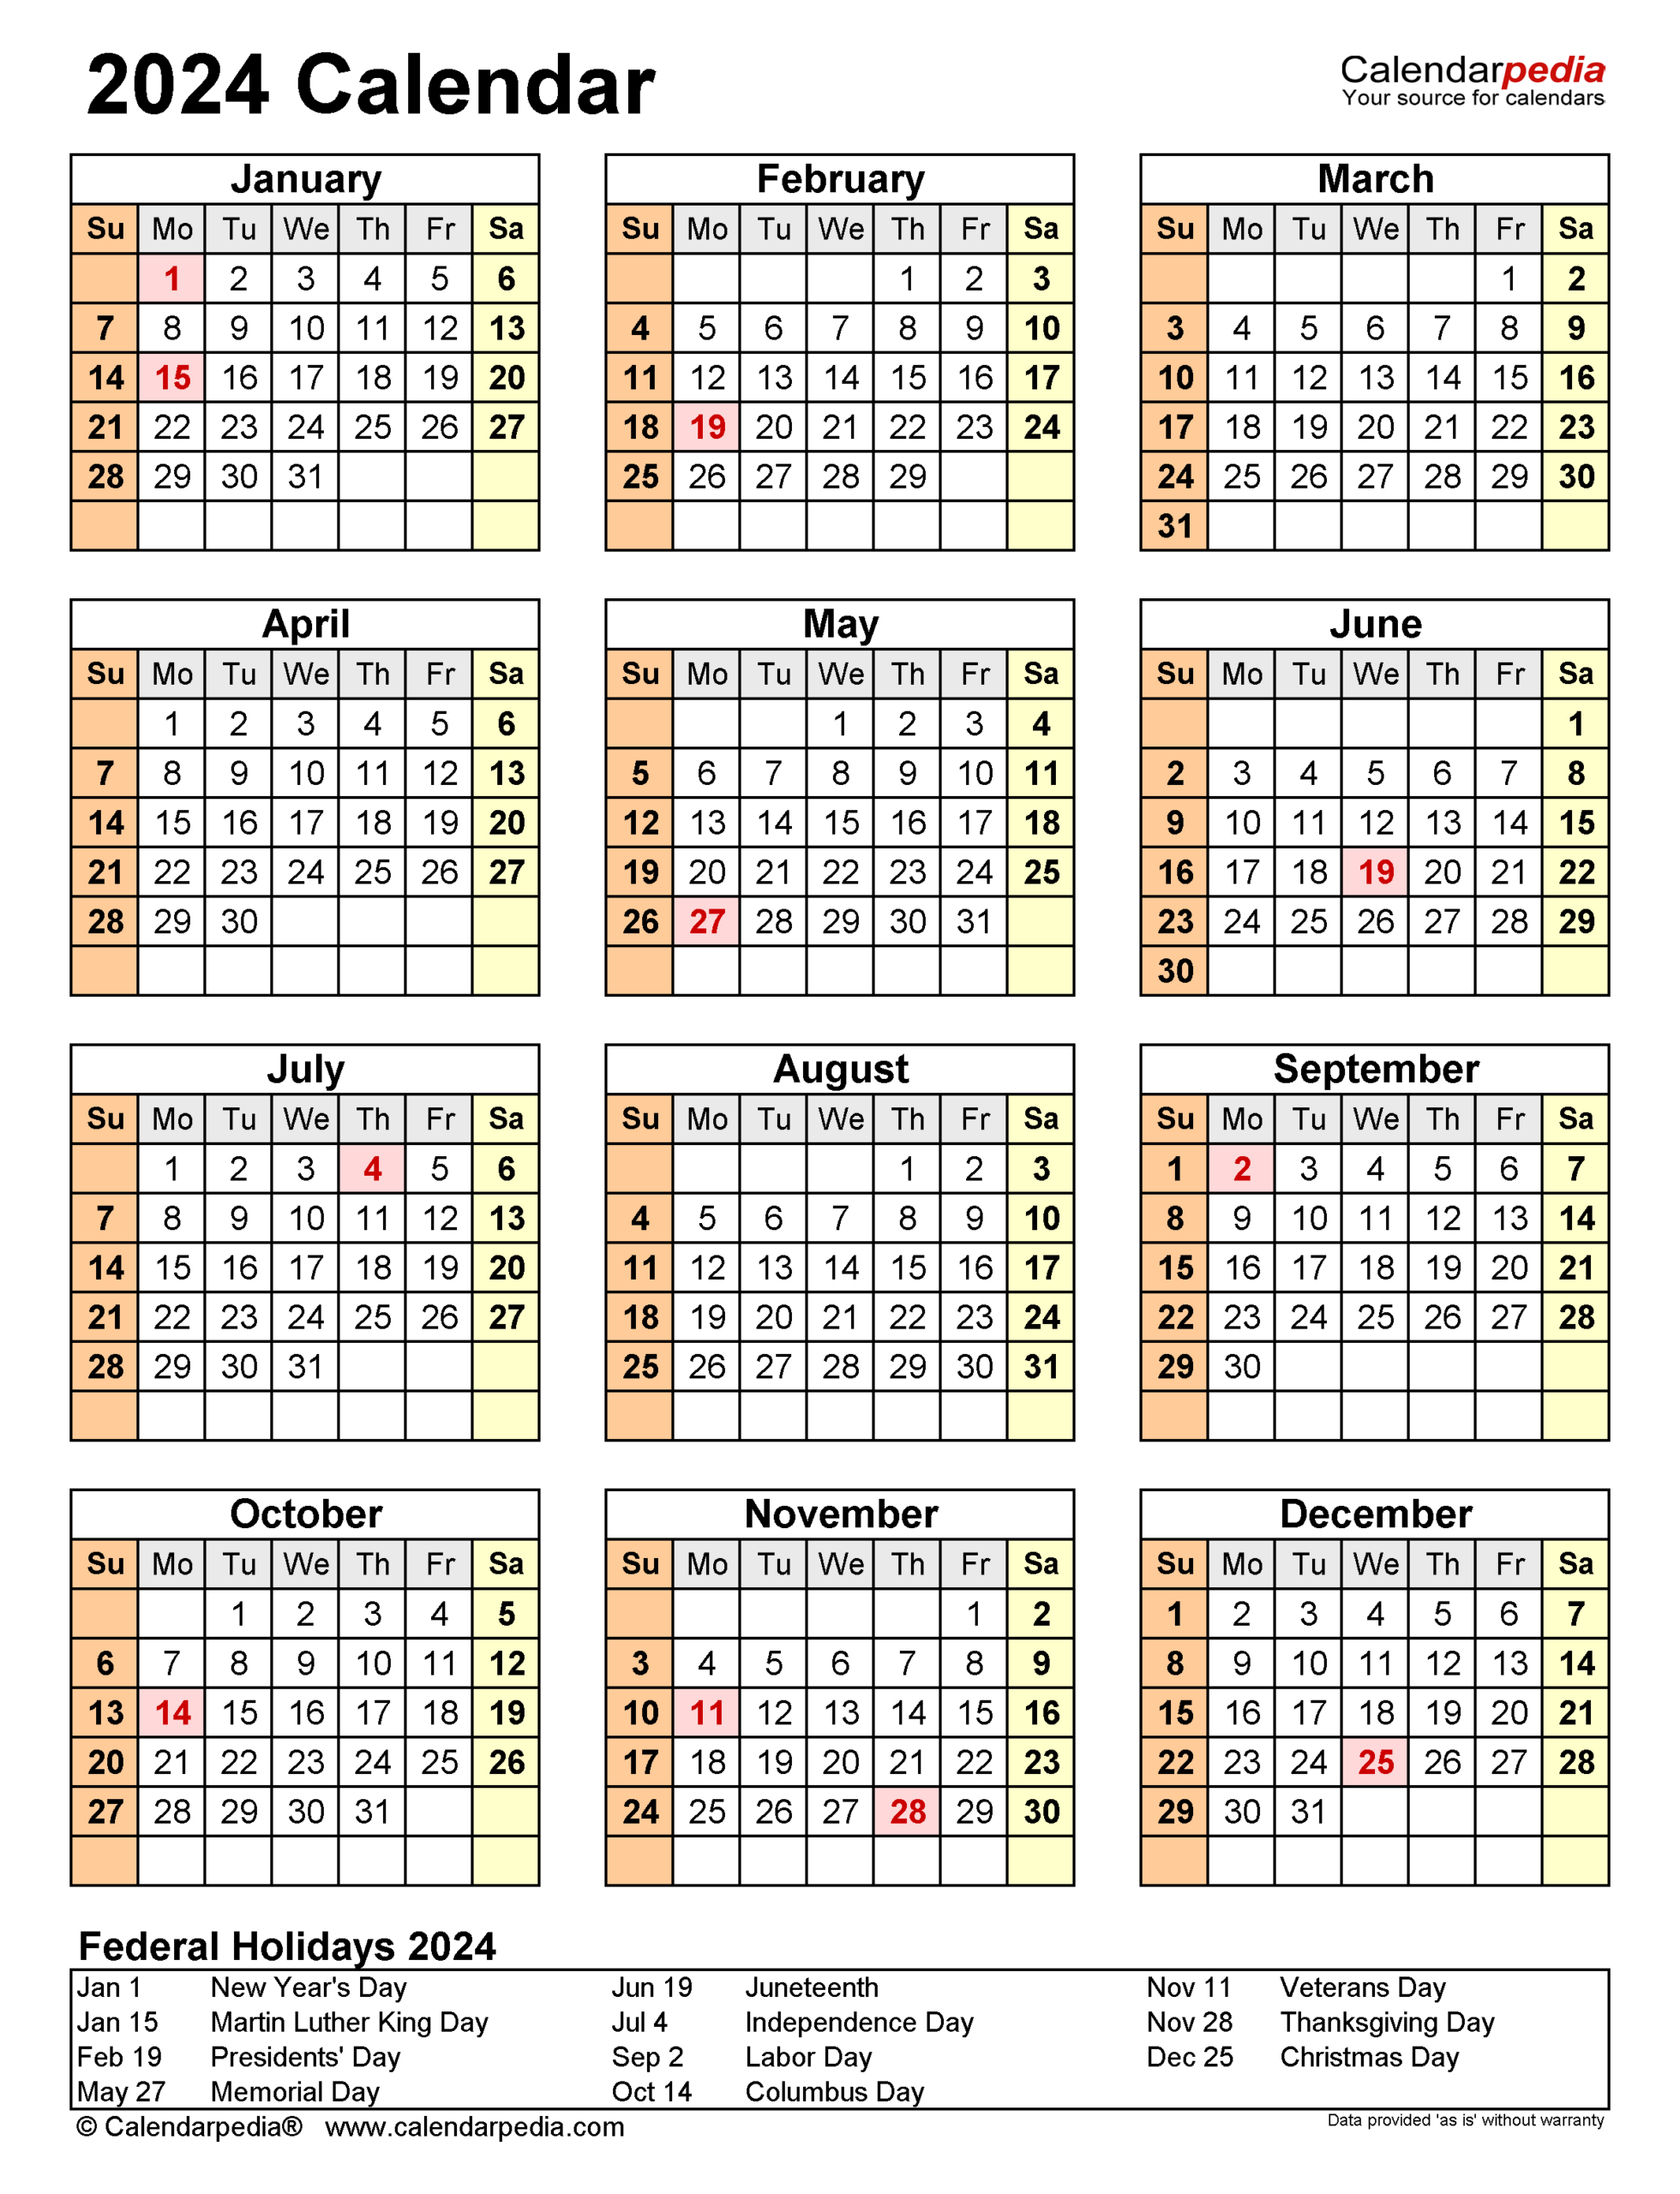 2024 Calendar - Free Printable Word Templates - Calendarpedia | How Many Days In 2024 Calendar Year?